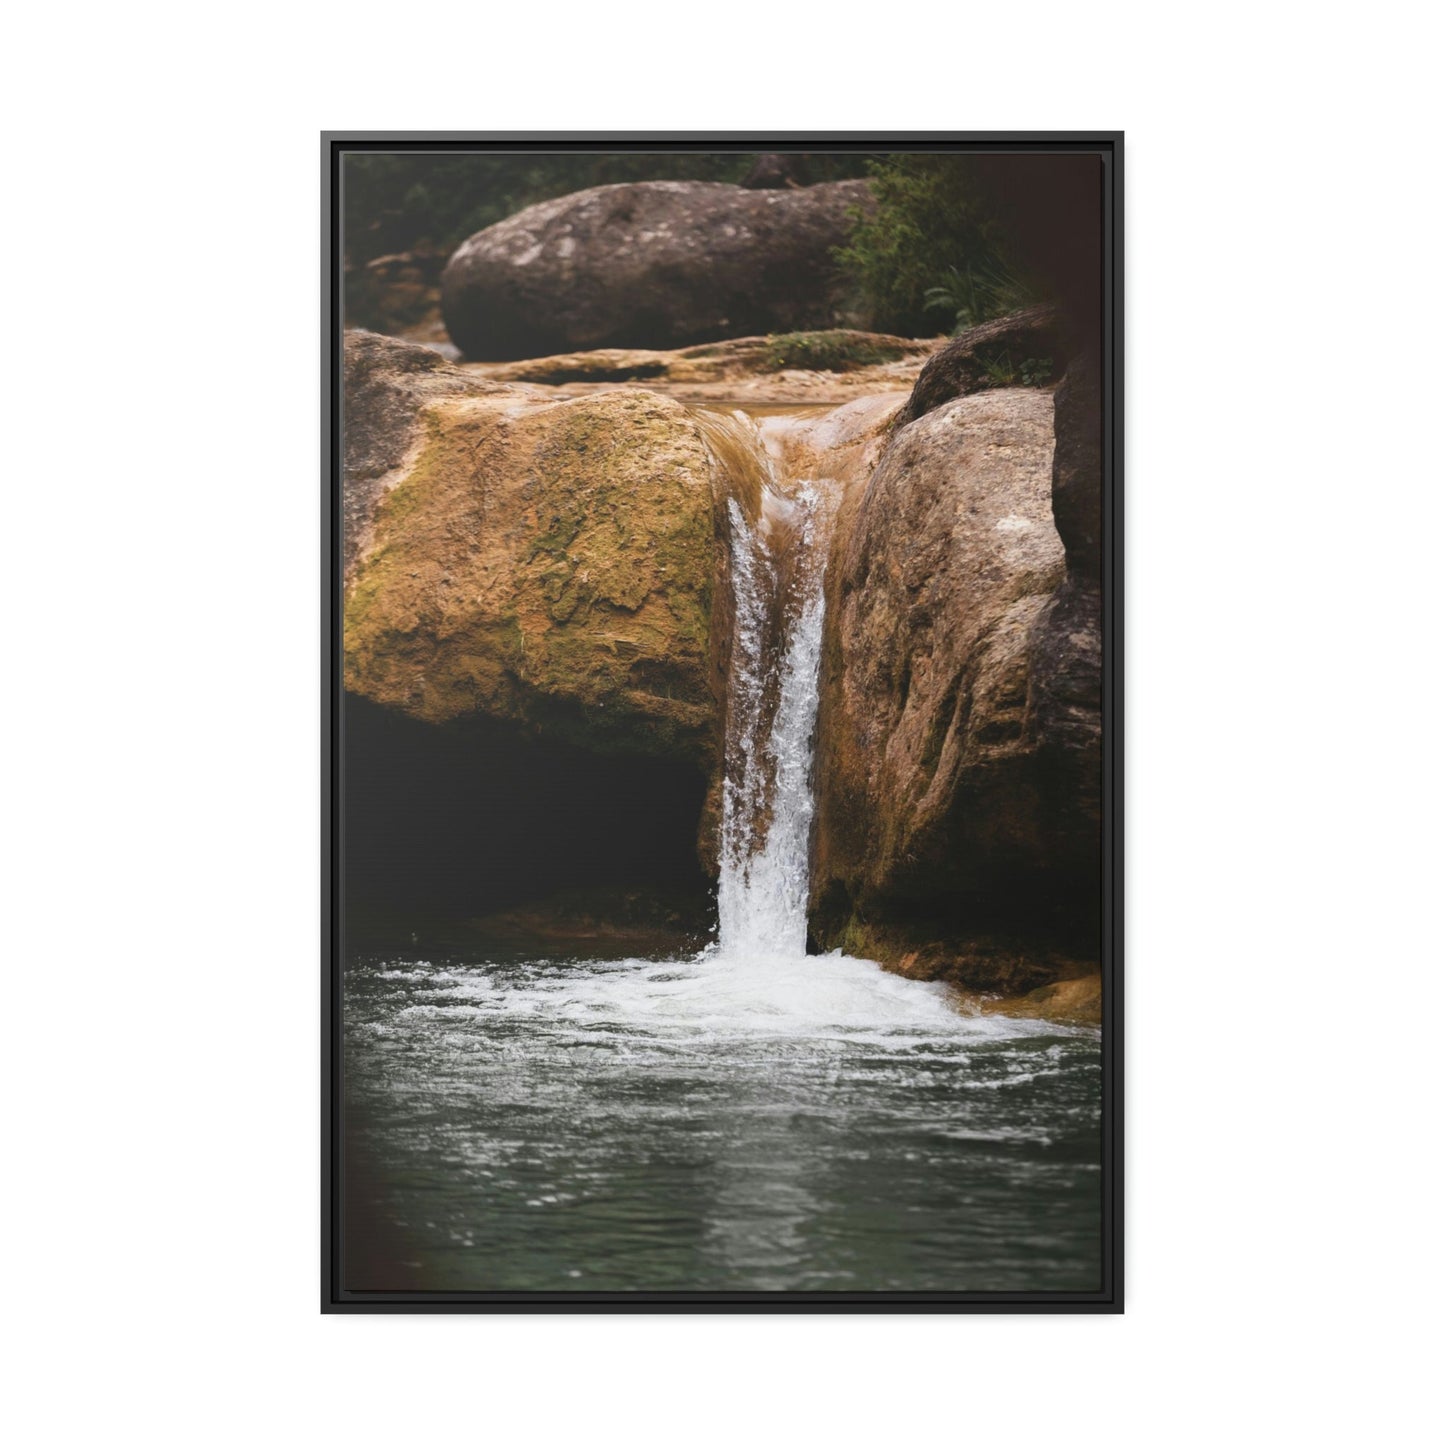 Waterfall Mirage: A Vision of Wonder